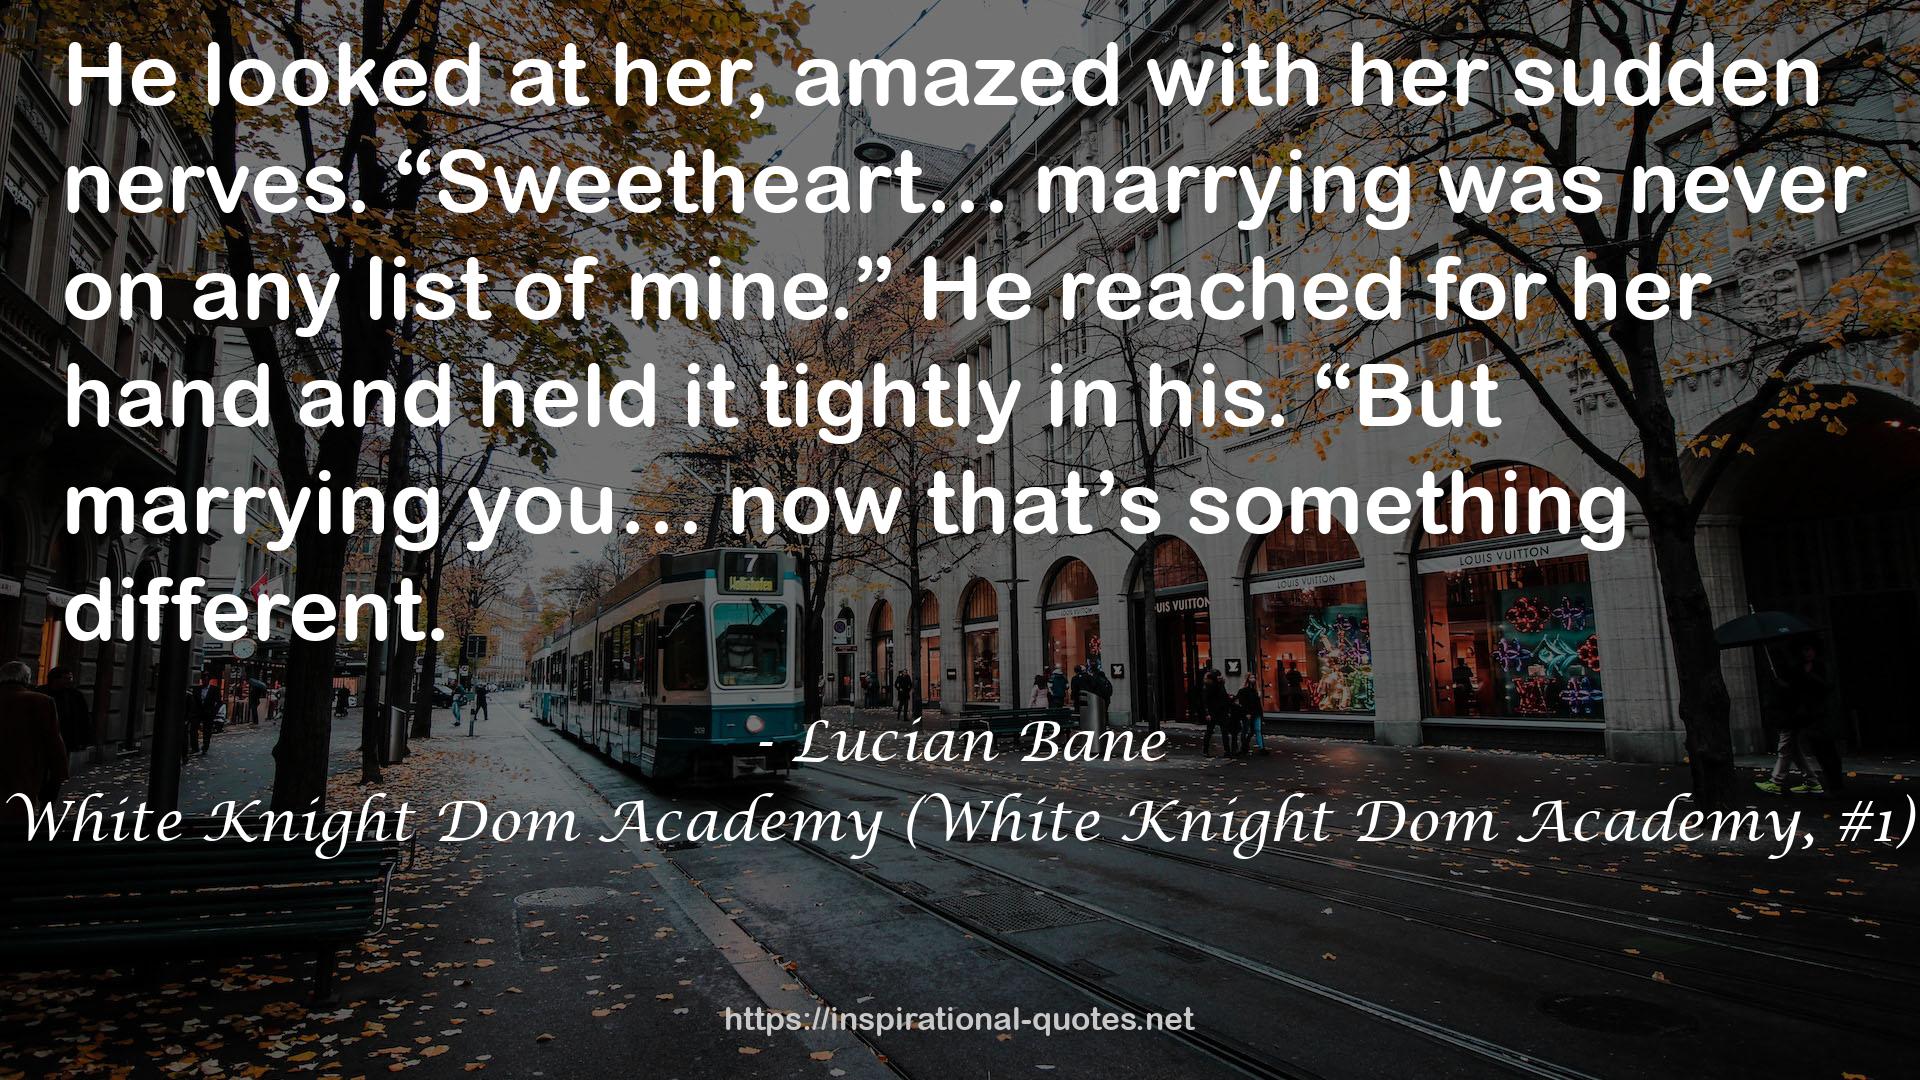 White Knight Dom Academy (White Knight Dom Academy, #1) QUOTES